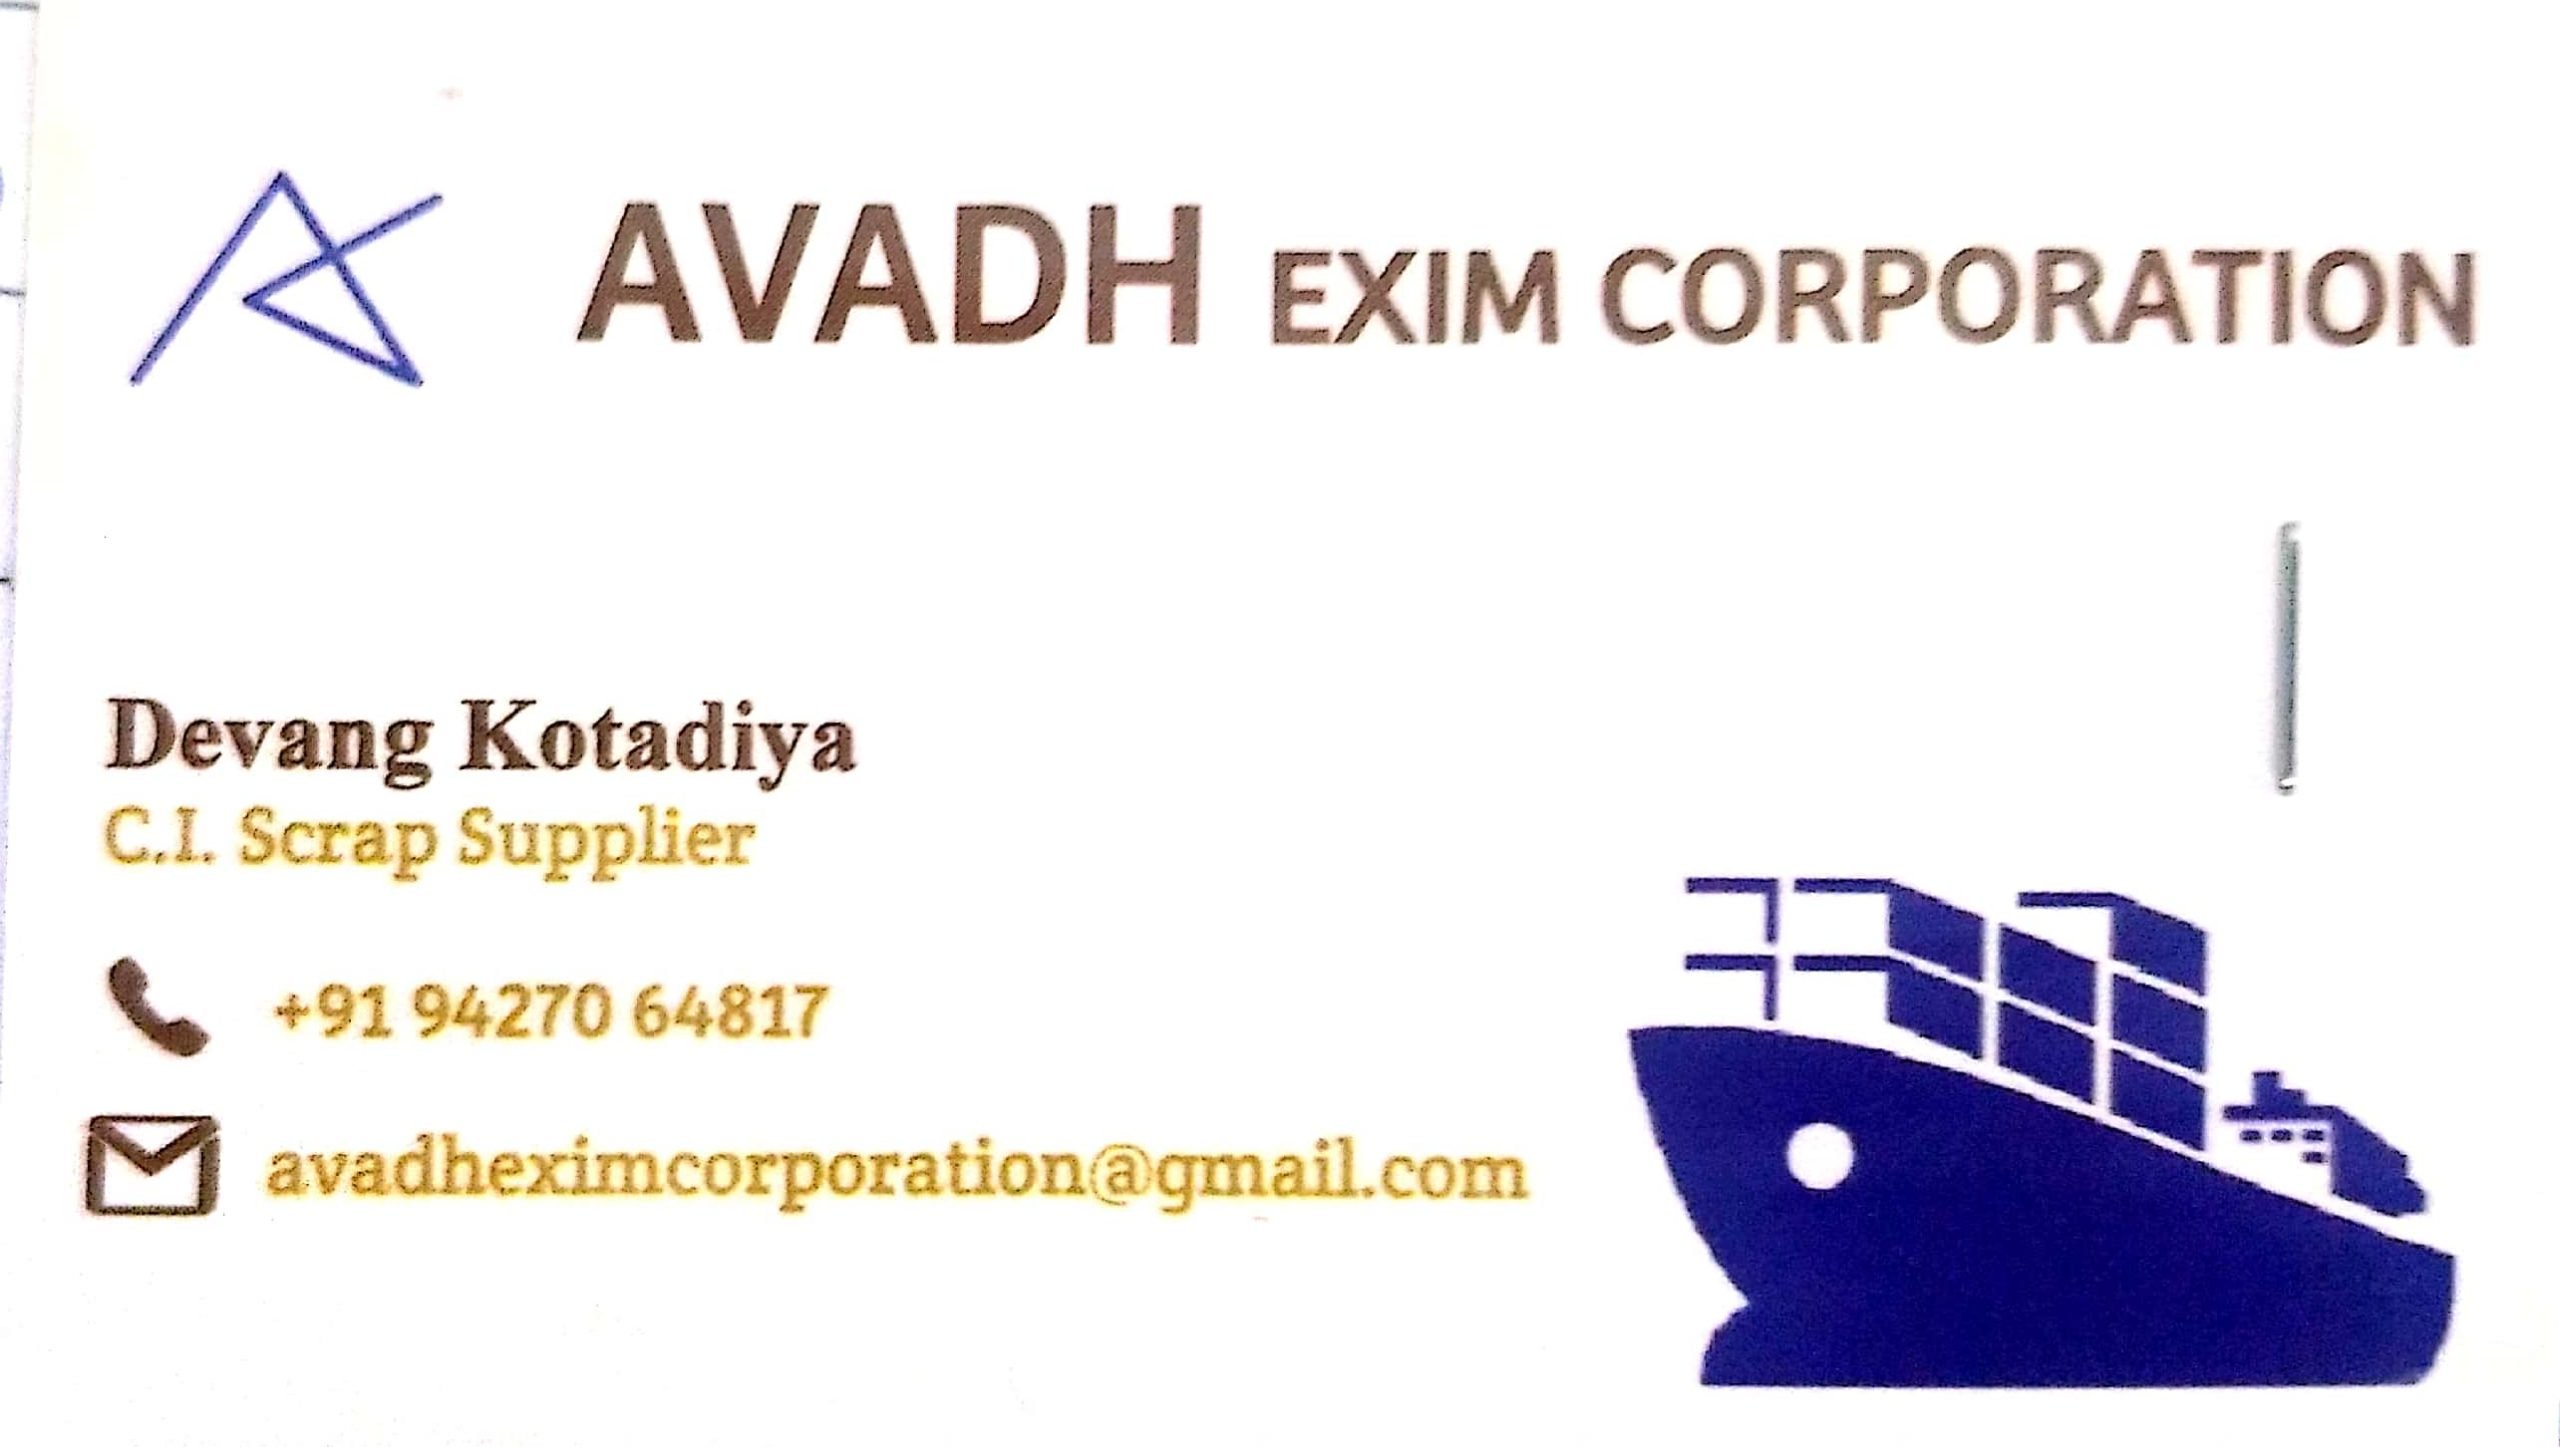 Avadh Exim Corporation